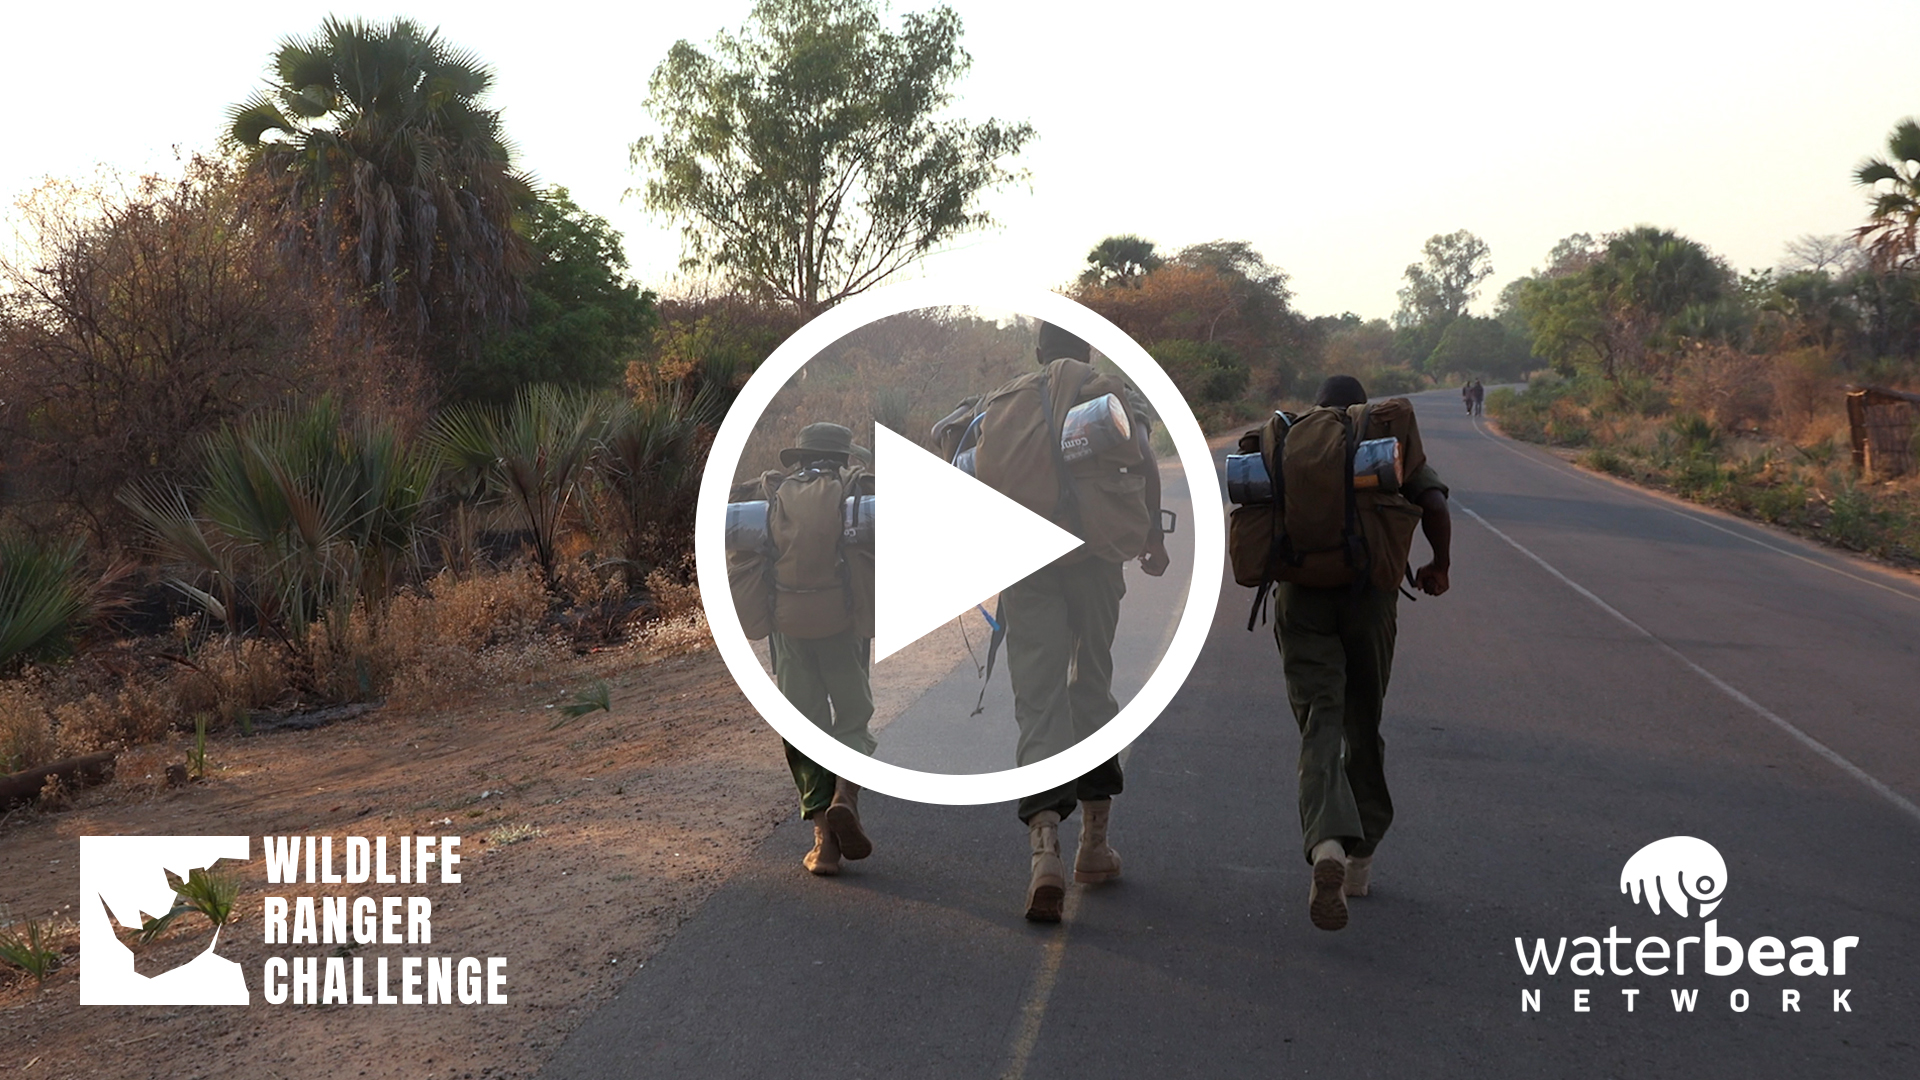 Wildlife Ranger Challenge Film With WaterBear